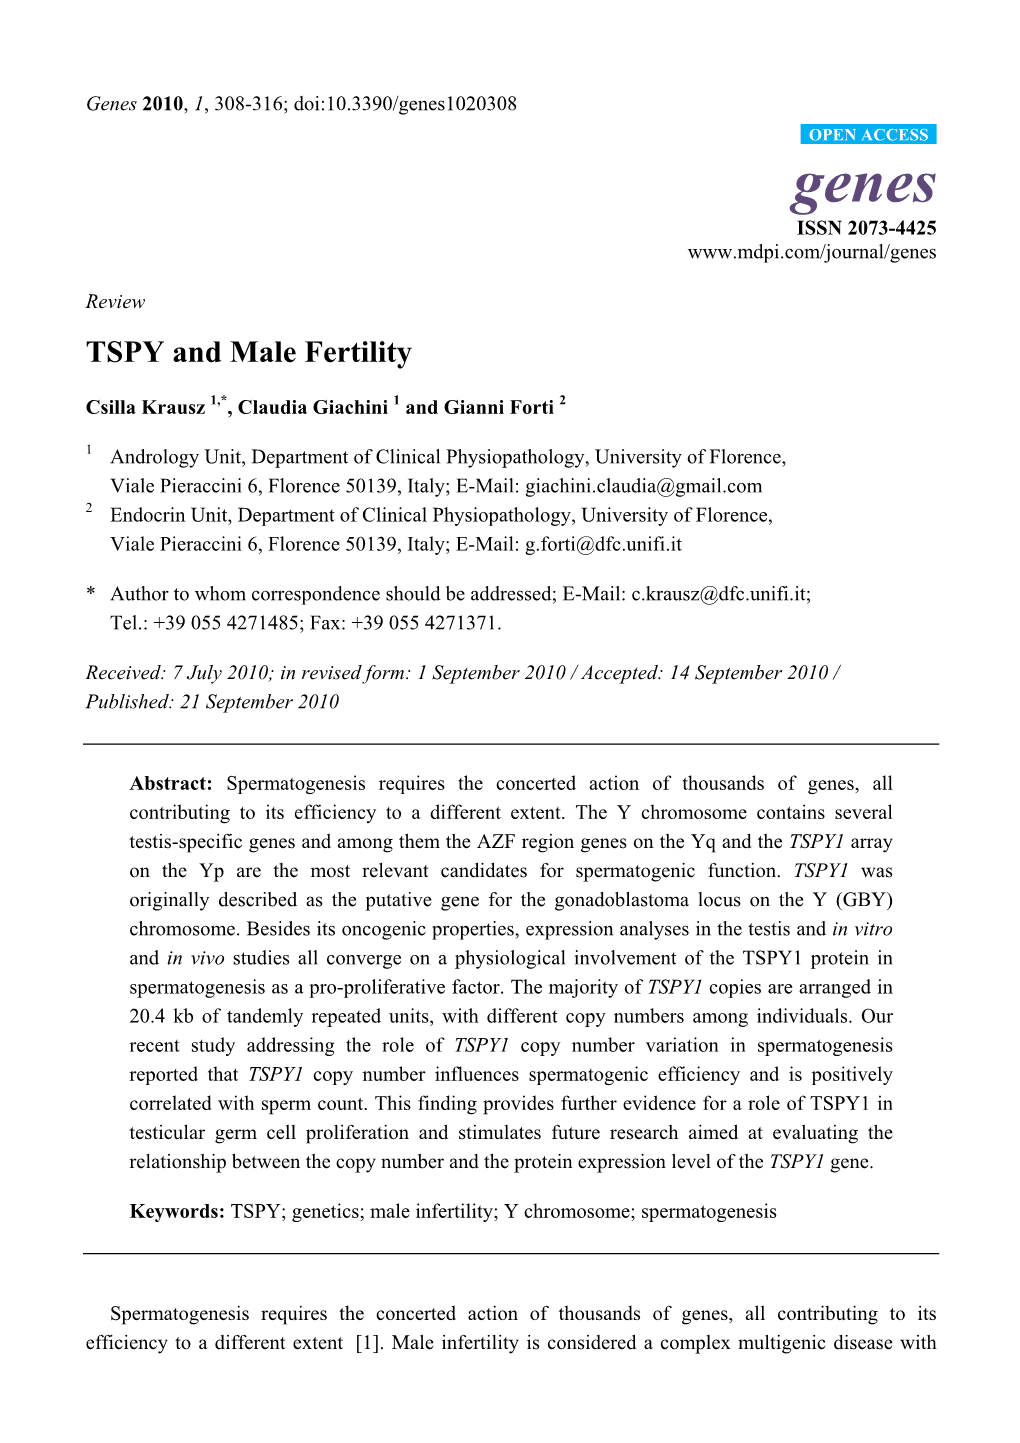 TSPY and Male Fertility